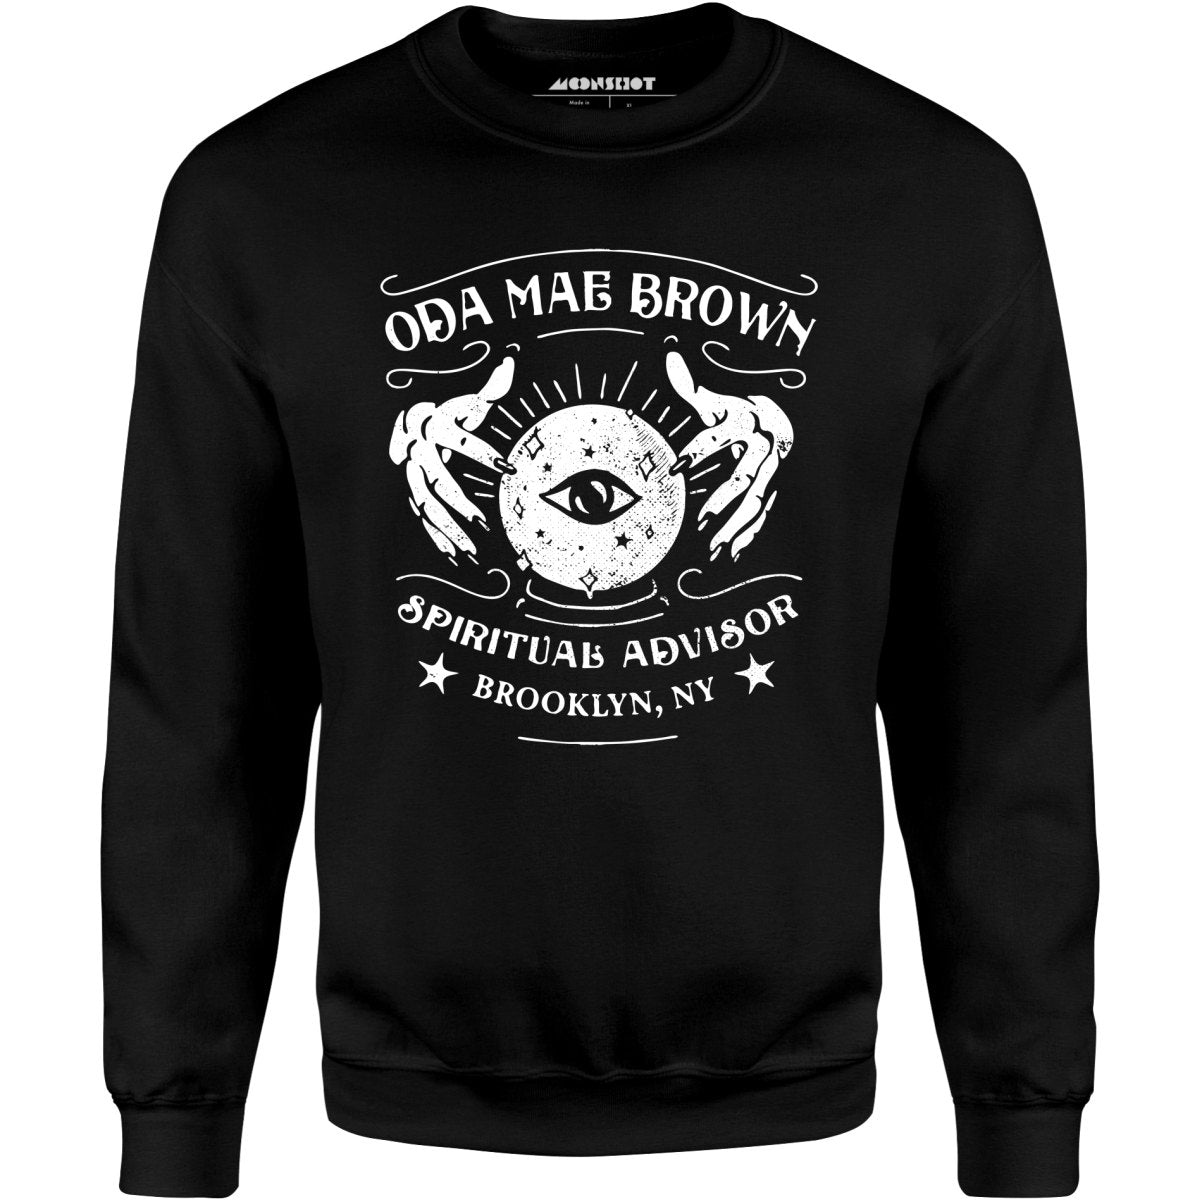 Ghost - Oda Mae Brown - Spiritual Advisor - Unisex Sweatshirt